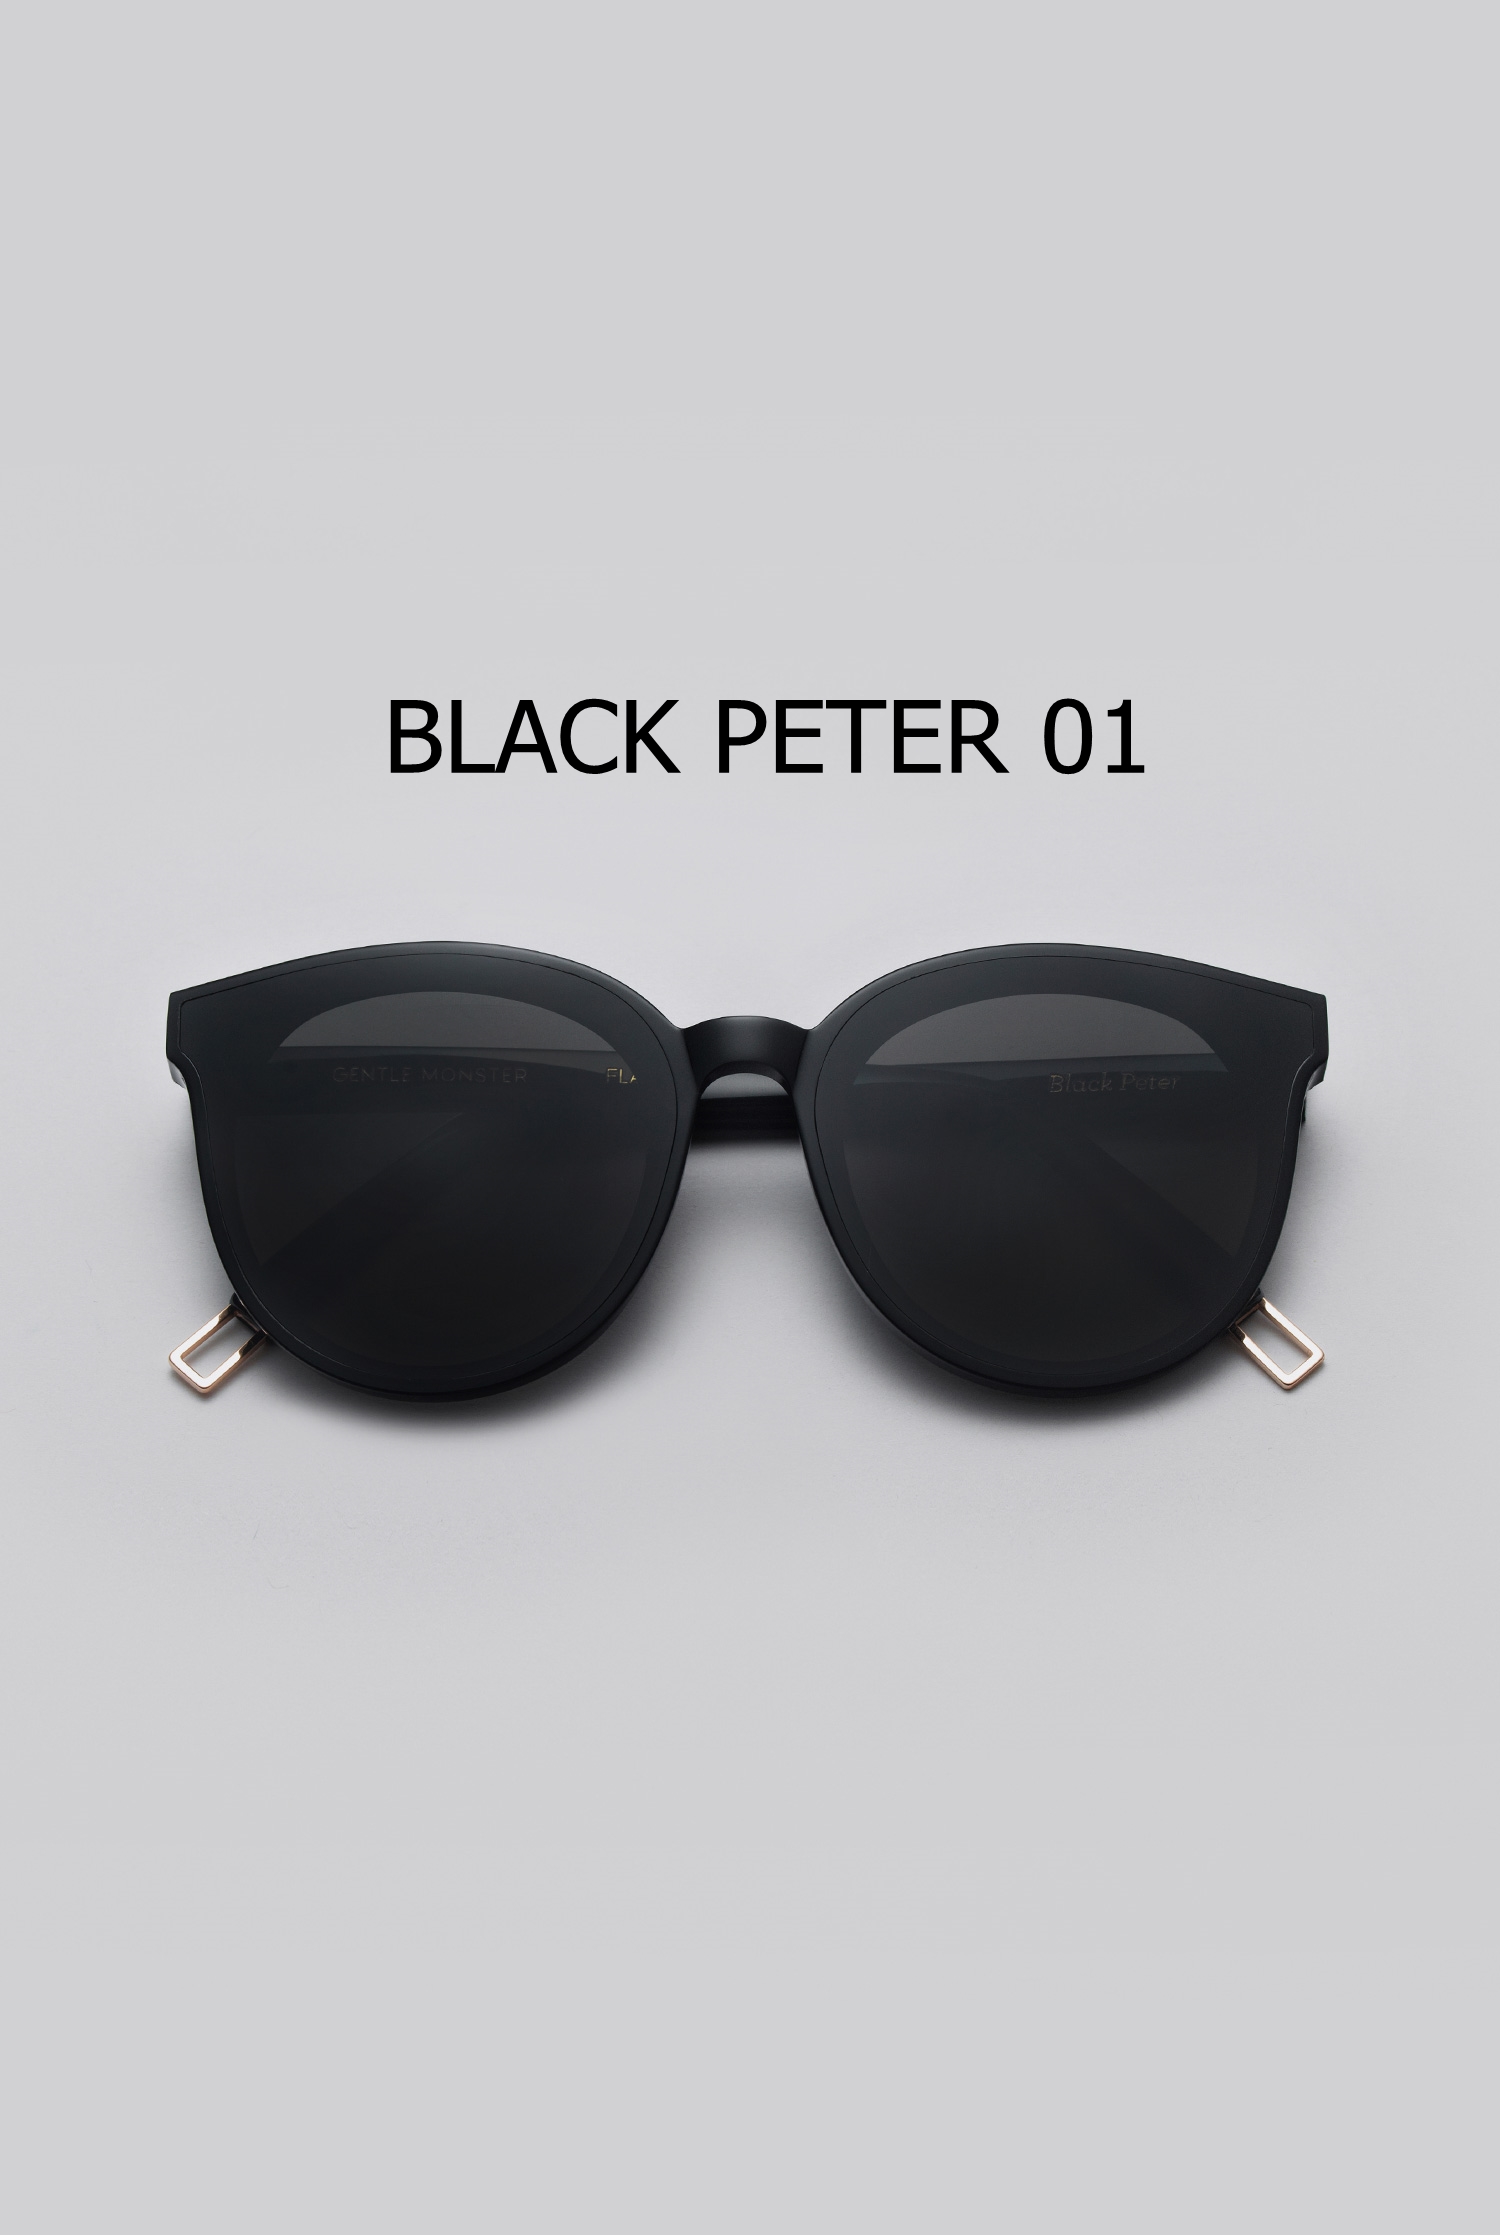 BLACK PETER 01 